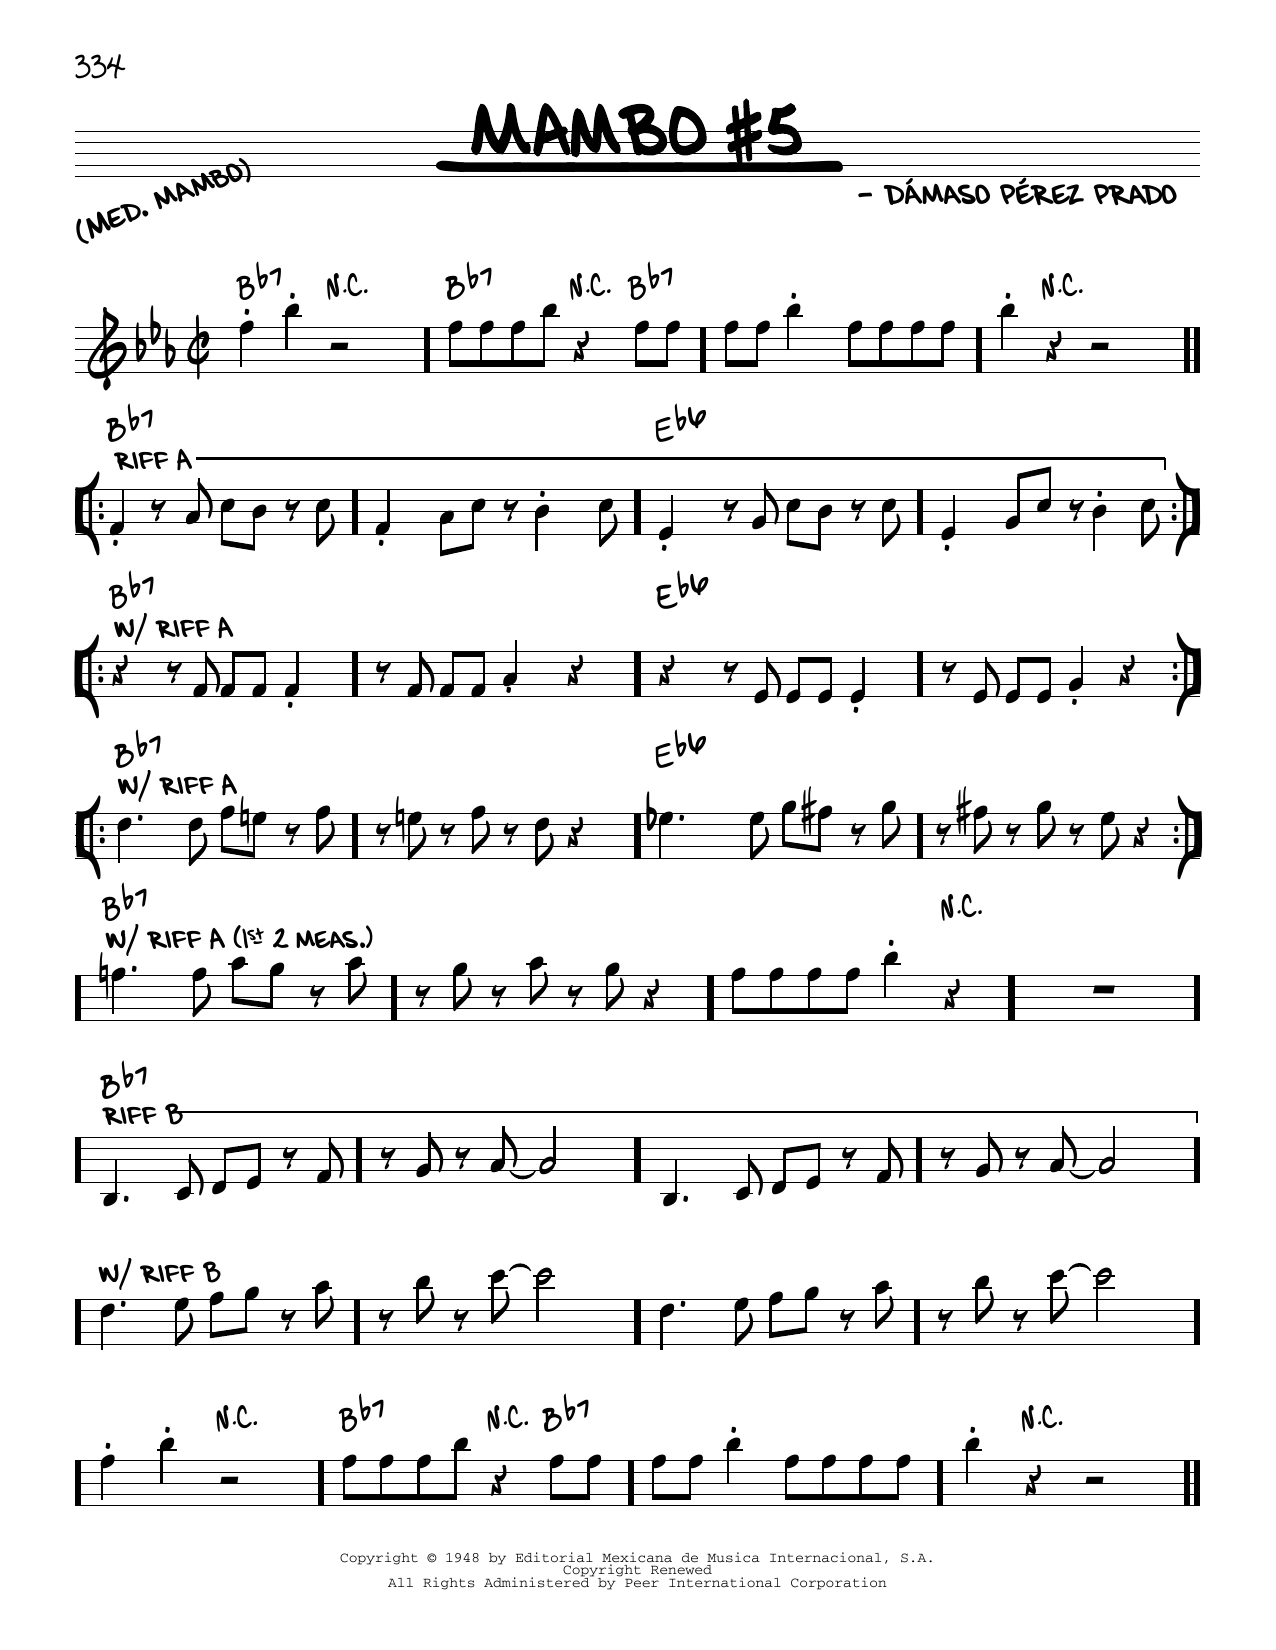 Perez Prado Mambo #5 Sheet Music Notes & Chords for Real Book - Melody & Chords - C Instruments - Download or Print PDF